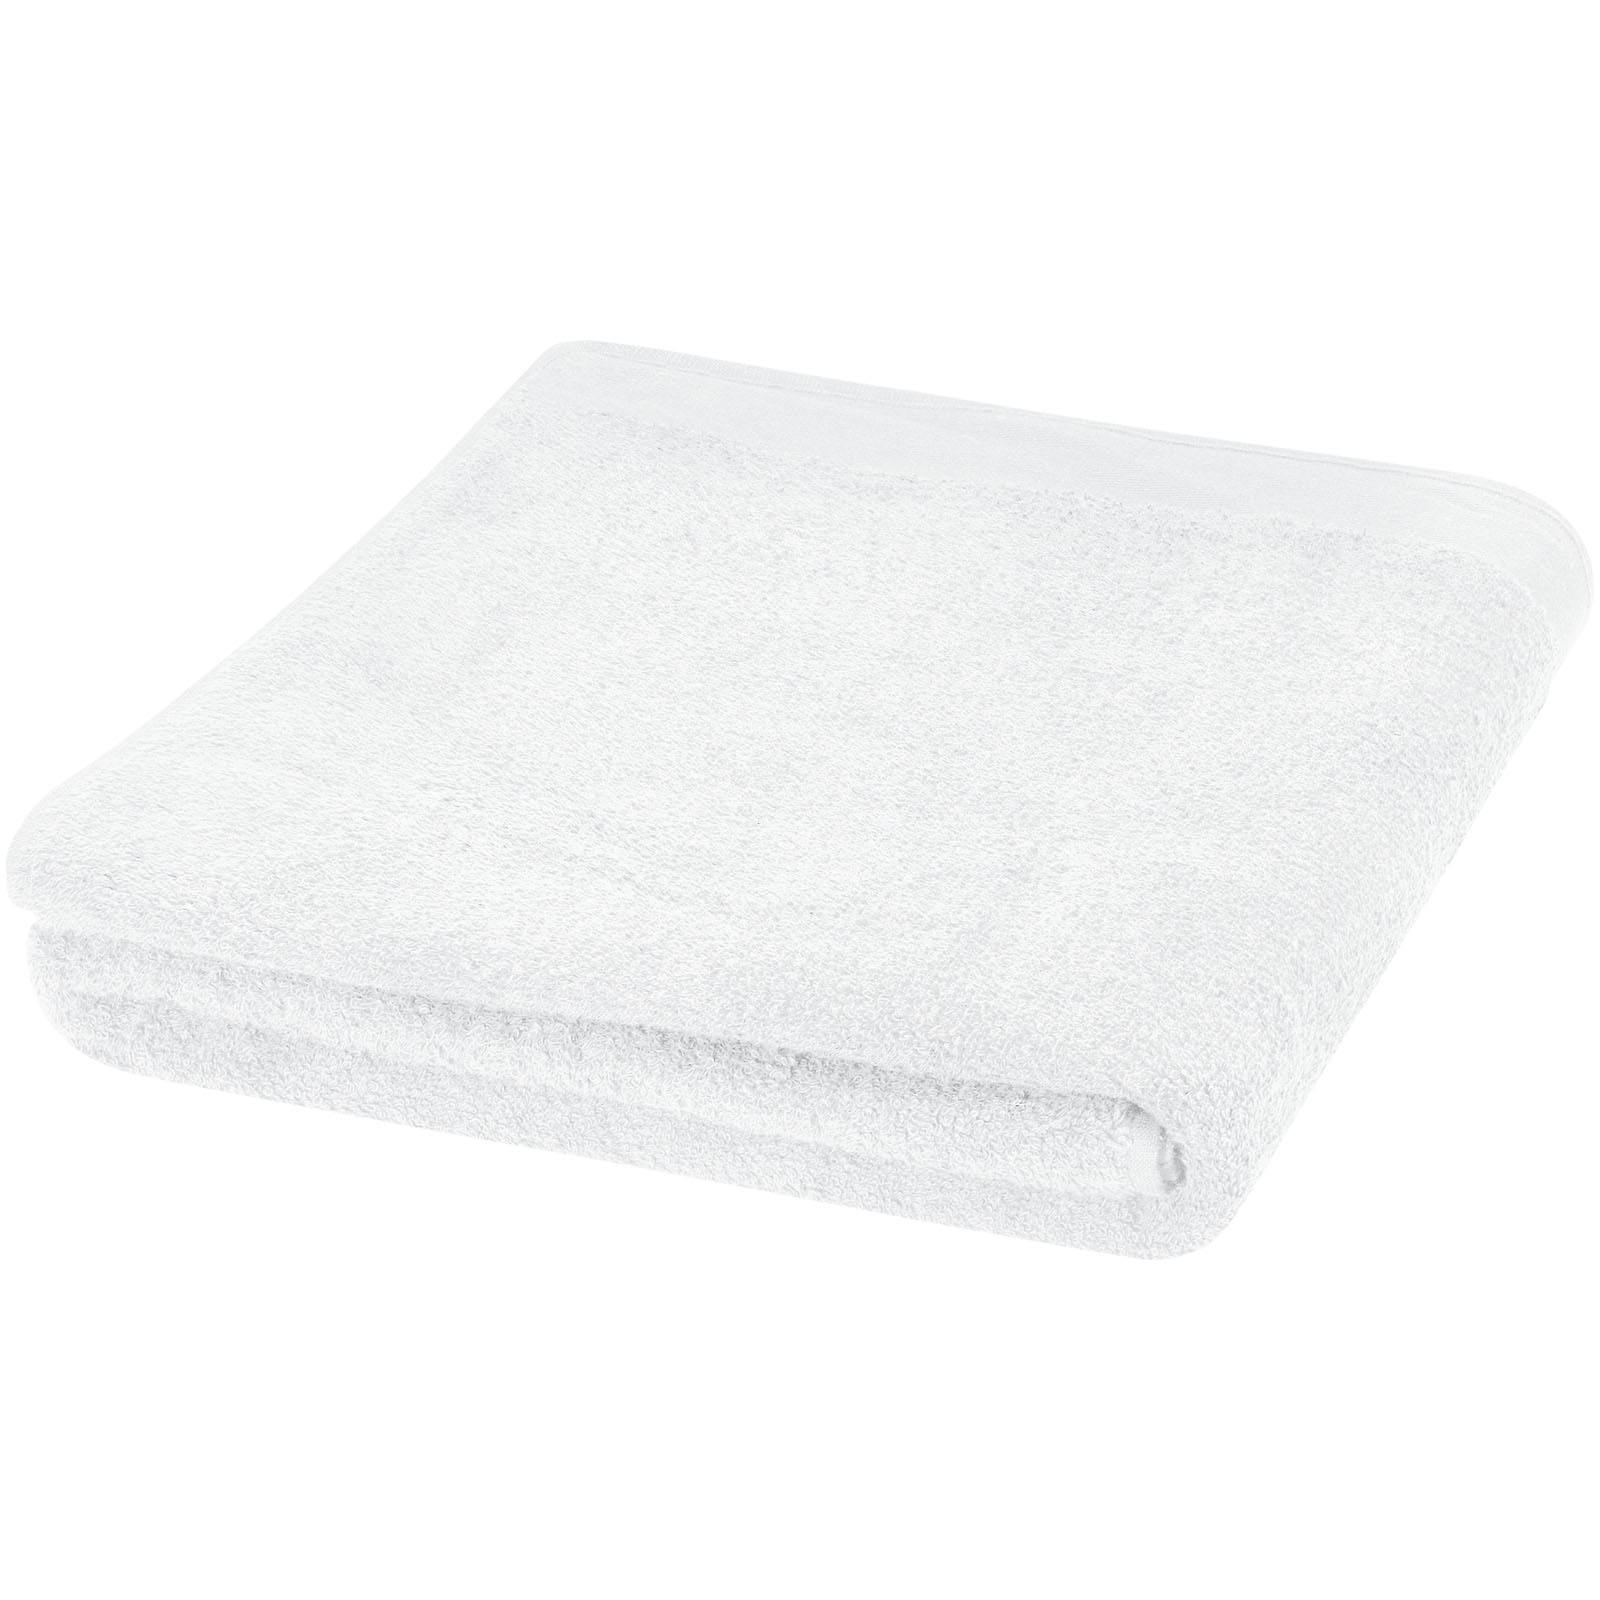 Advertising Towels - Riley 550 g/m² cotton towel 100x180 cm